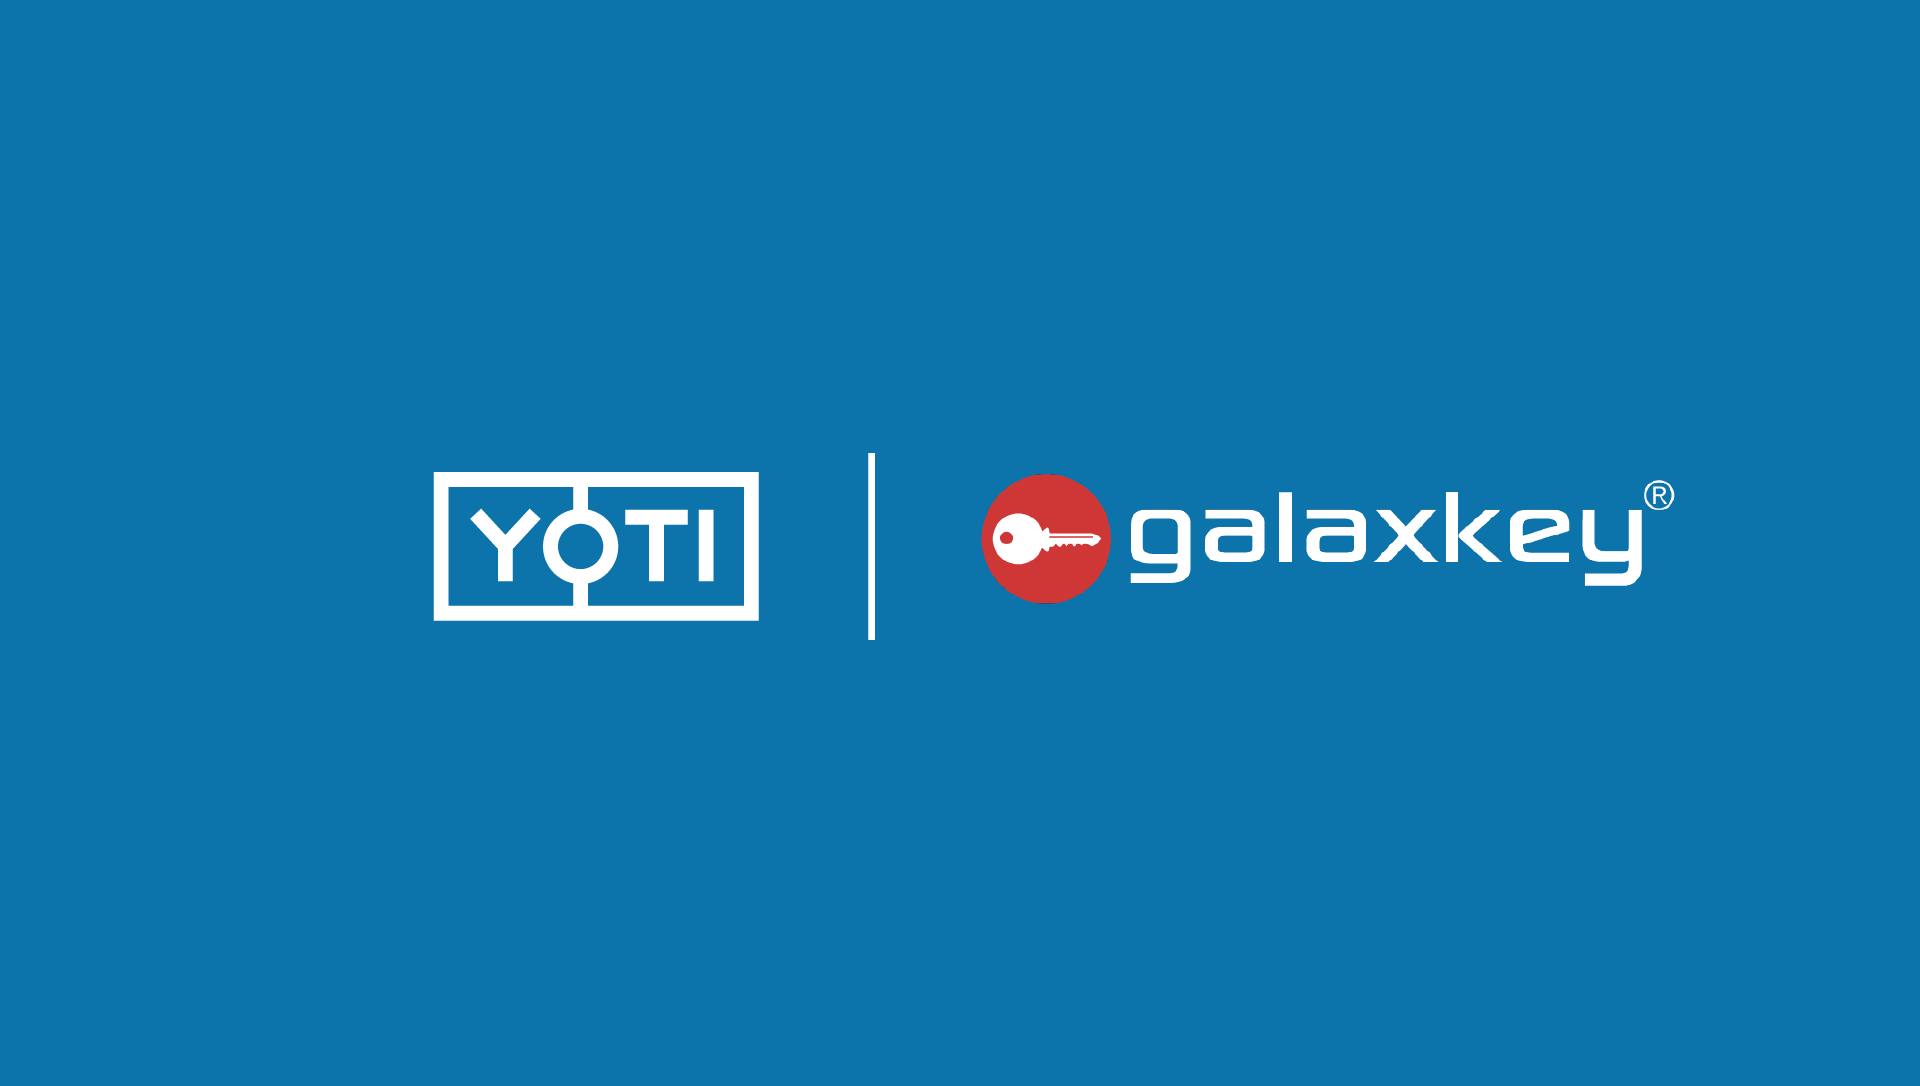 Yoti and Galaxkey partner to prevent email phishing